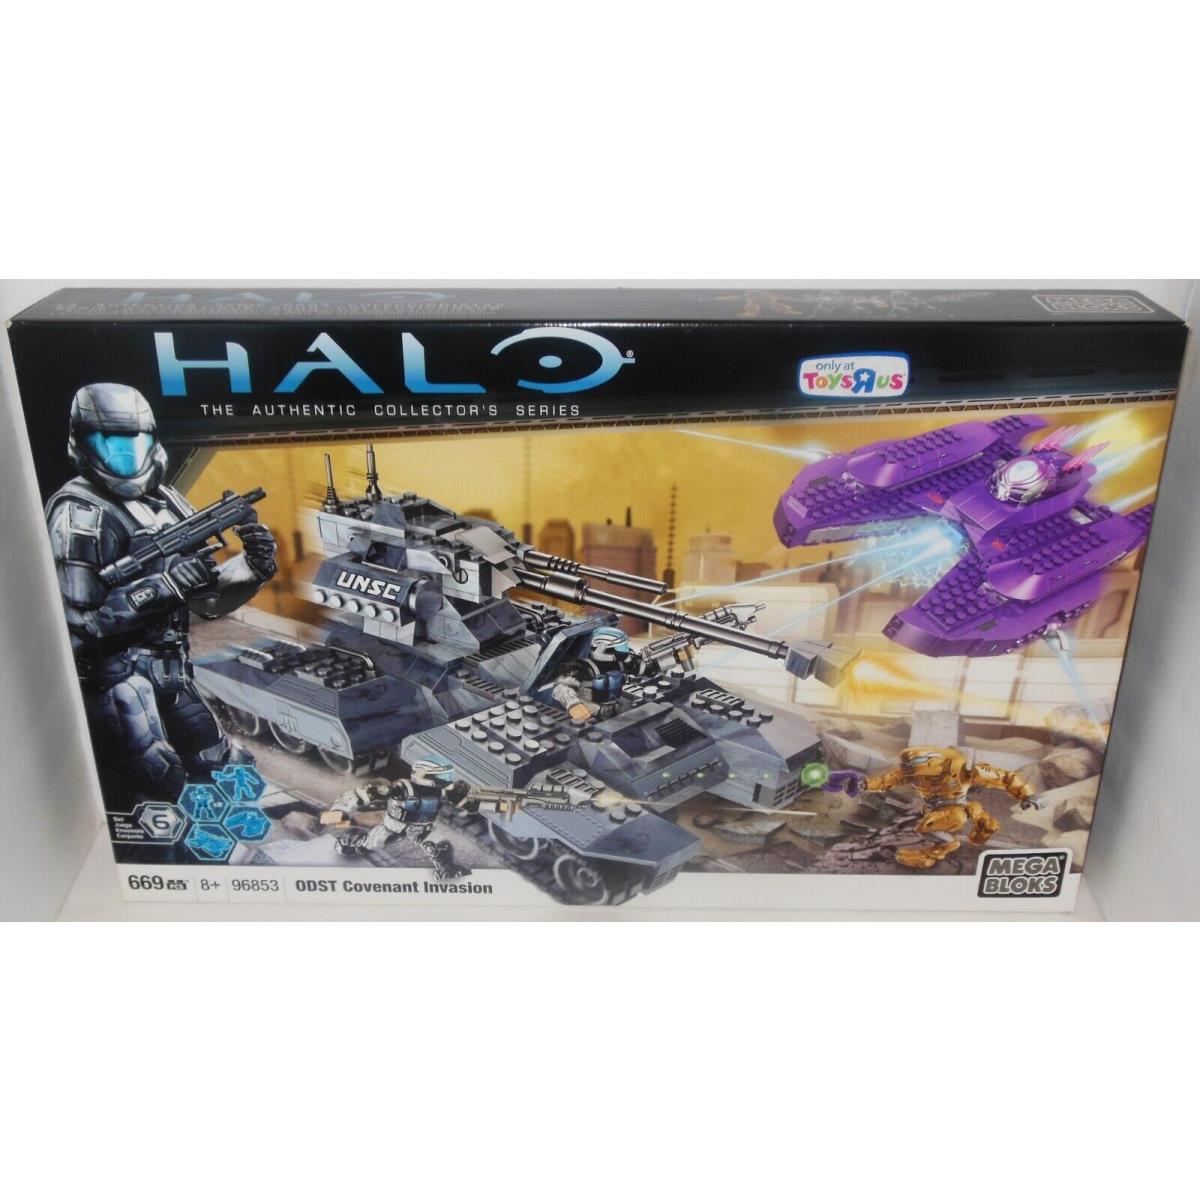 New: Mega Bloks: Halo Odst Covenant Invasion 96853: Toys R Us Set